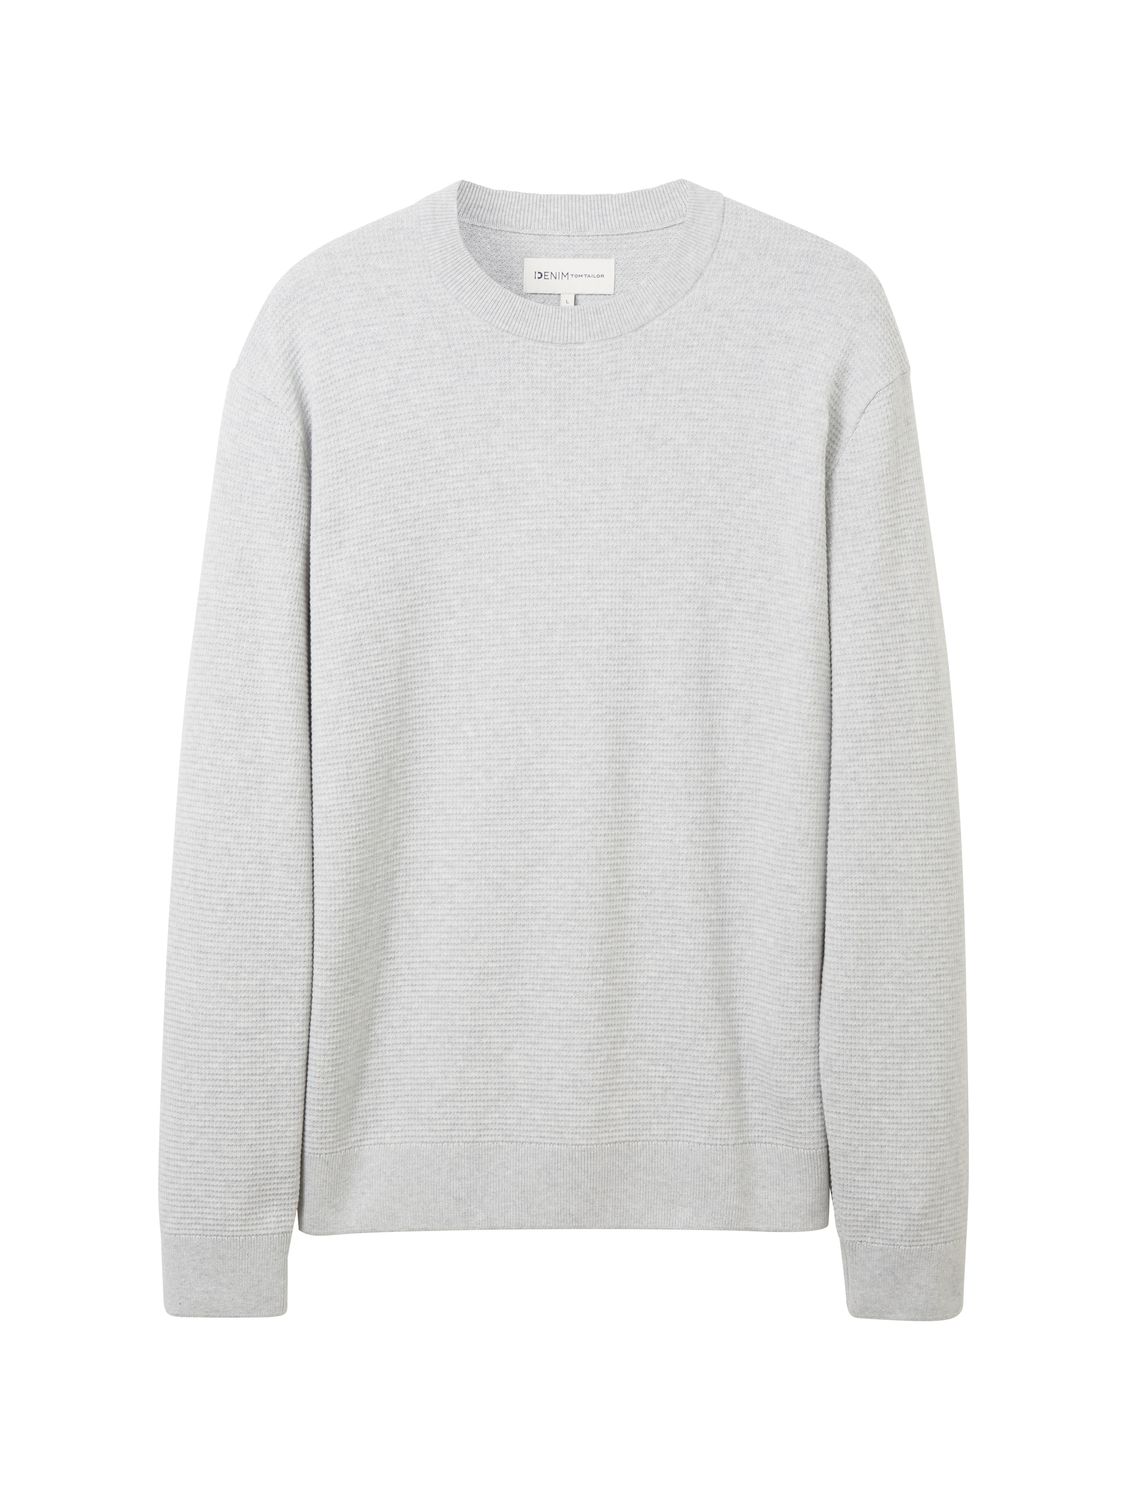 Пуловер TOM TAILOR Denim STRUCTURED BASIC, серый худи tom tailor размер xl серый